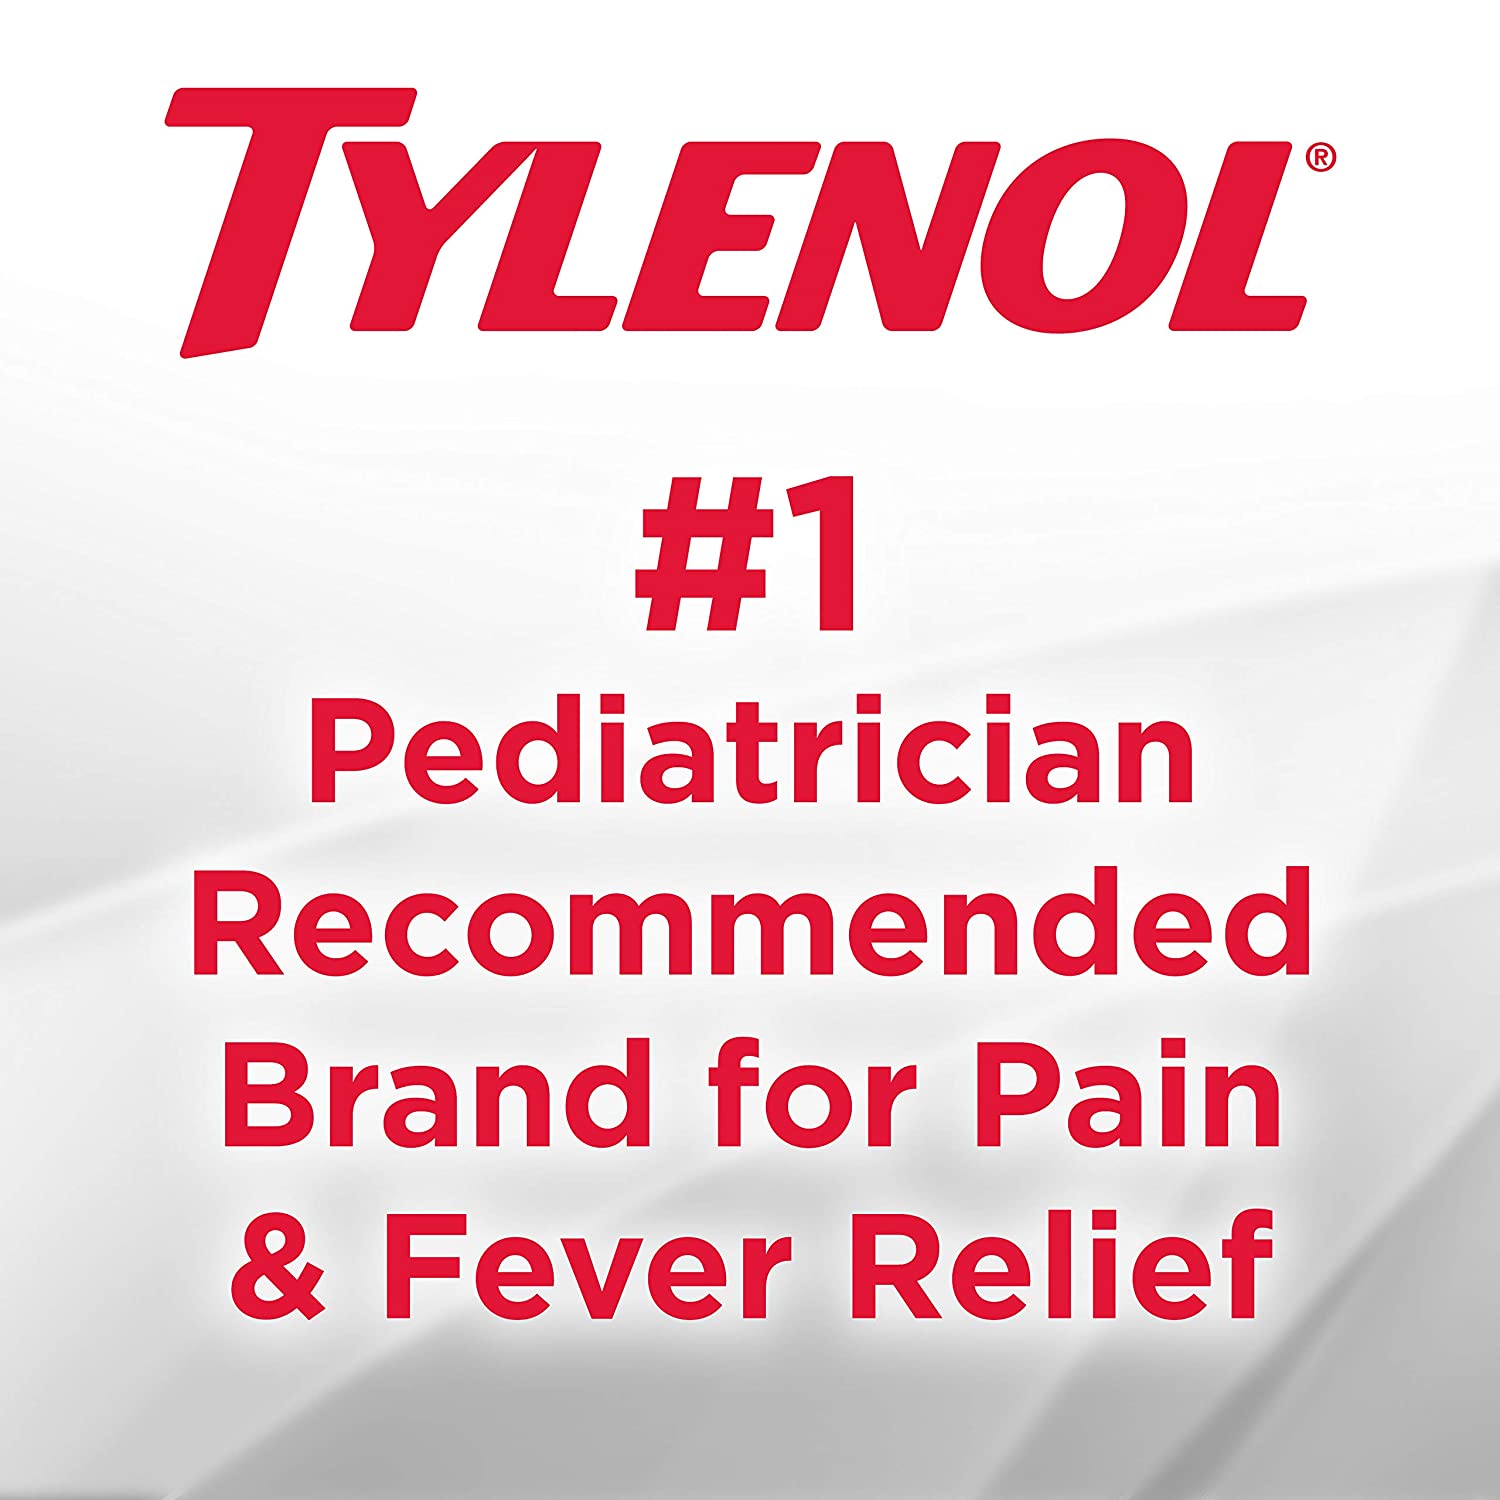 Tylenol Children's Oral Suspension Medicine, Bubble Gum - 4 fl. oz